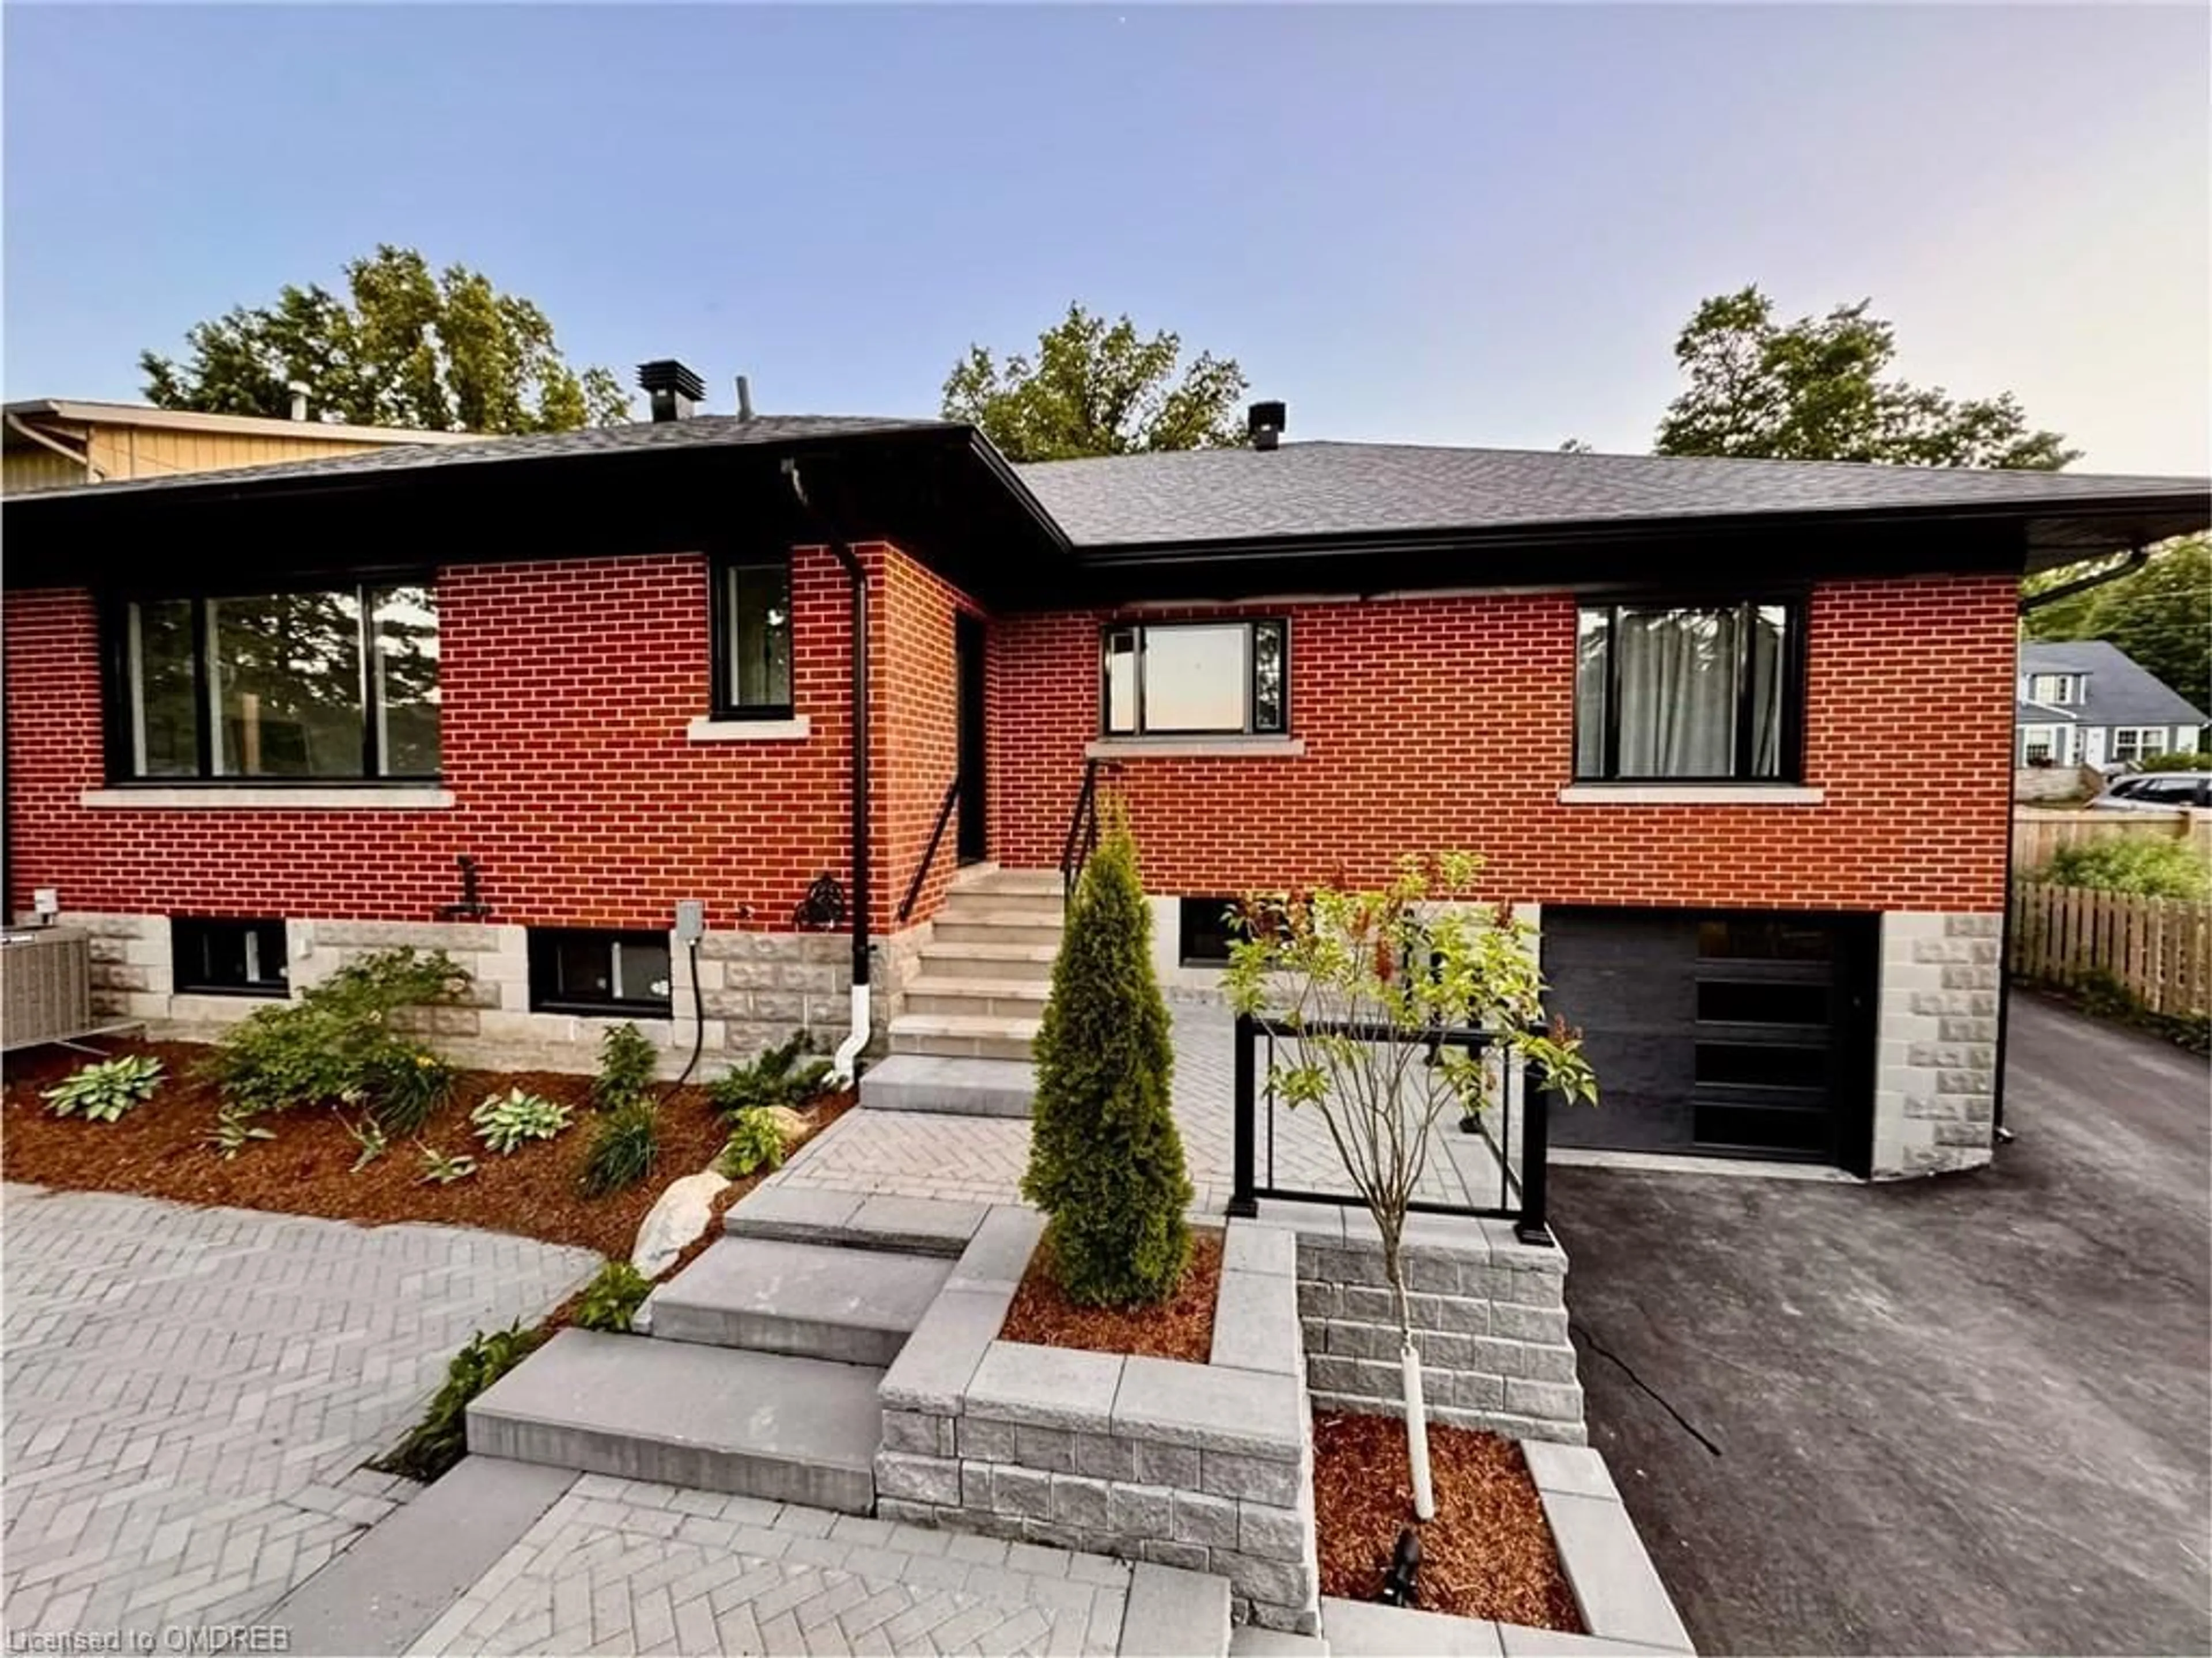 Home with brick exterior material for 13 Amanda St, Orangeville Ontario L9W 2J9